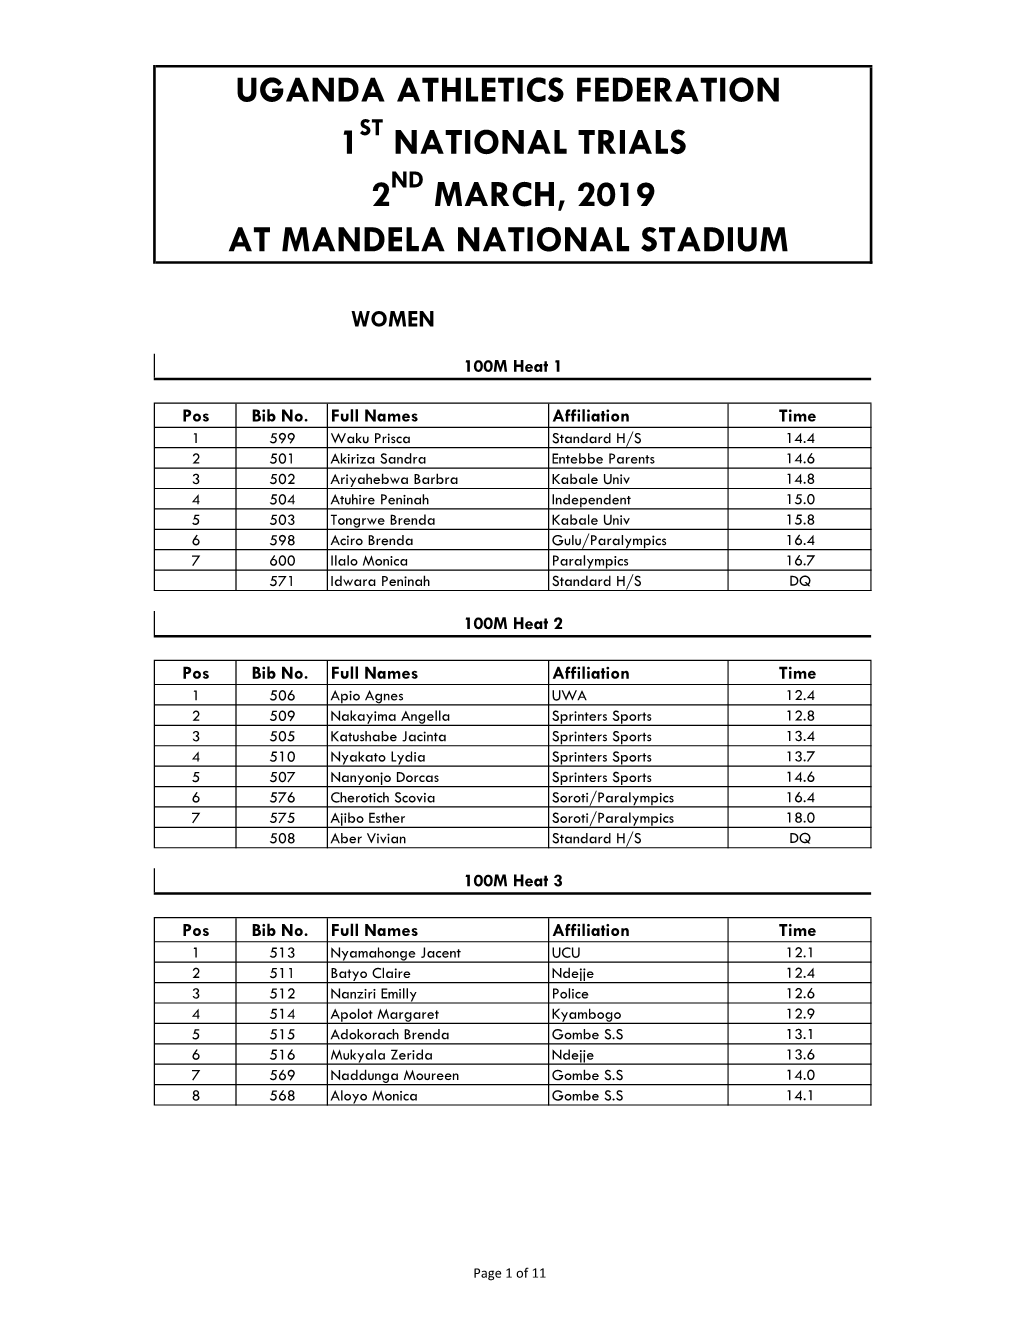 Uganda Athletics Federation 1 National Trials 2 March, 2019 at Mandela National Stadium